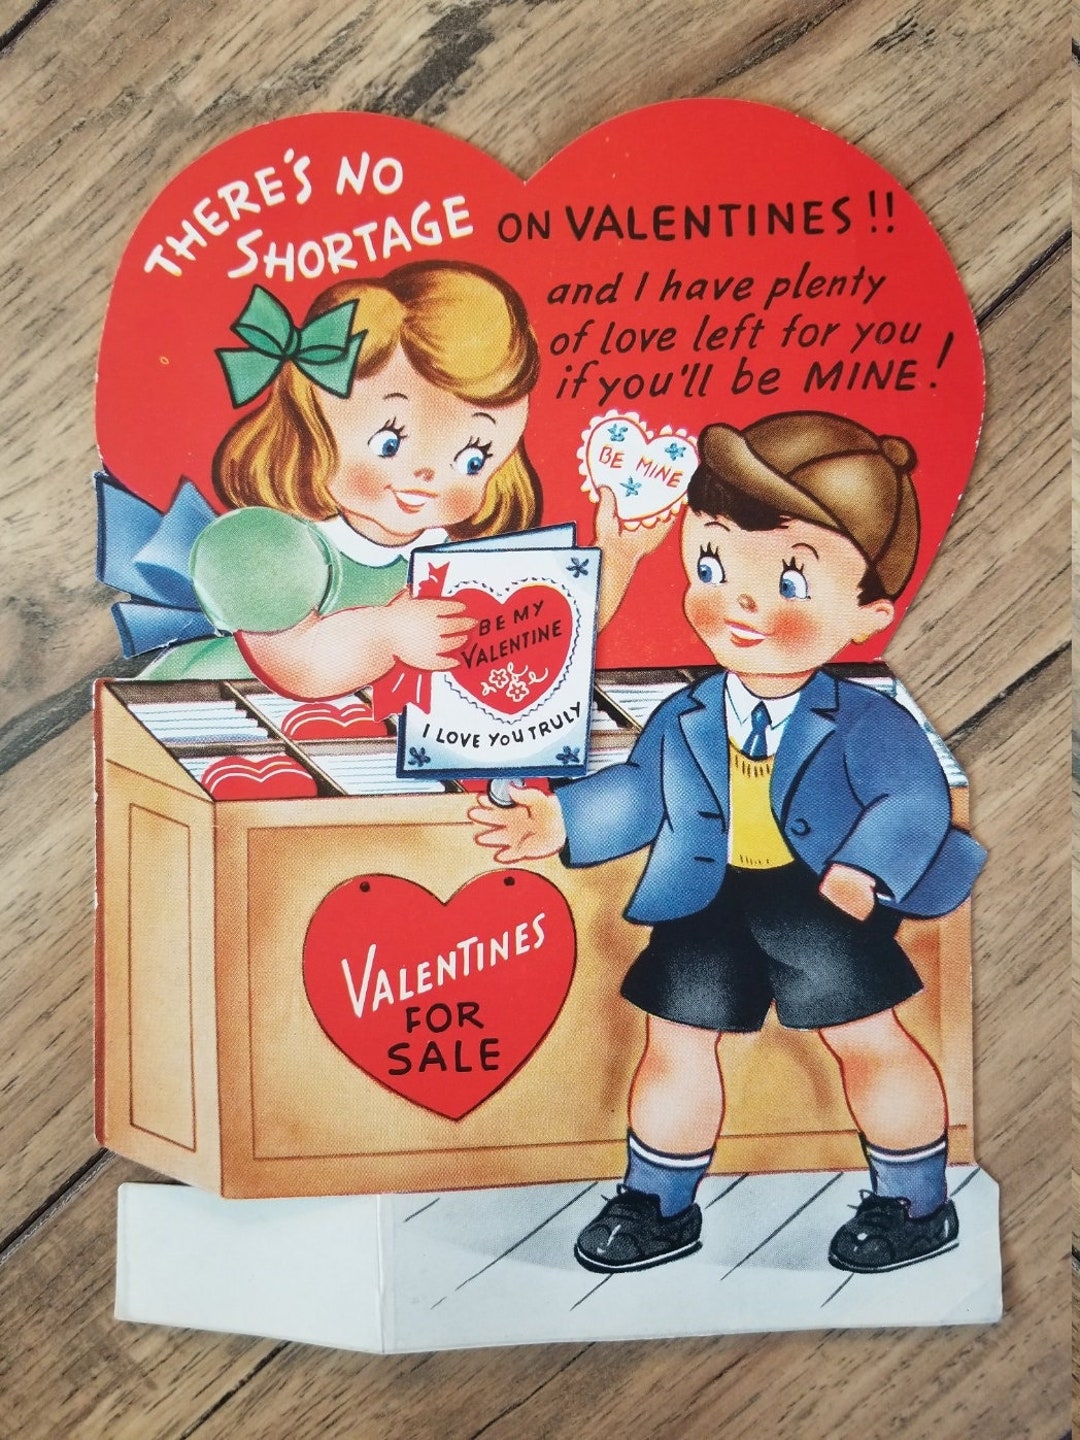 Vintage Valentine's Day Card Mechanical Little Boy & Girl Ameri-Card VGC